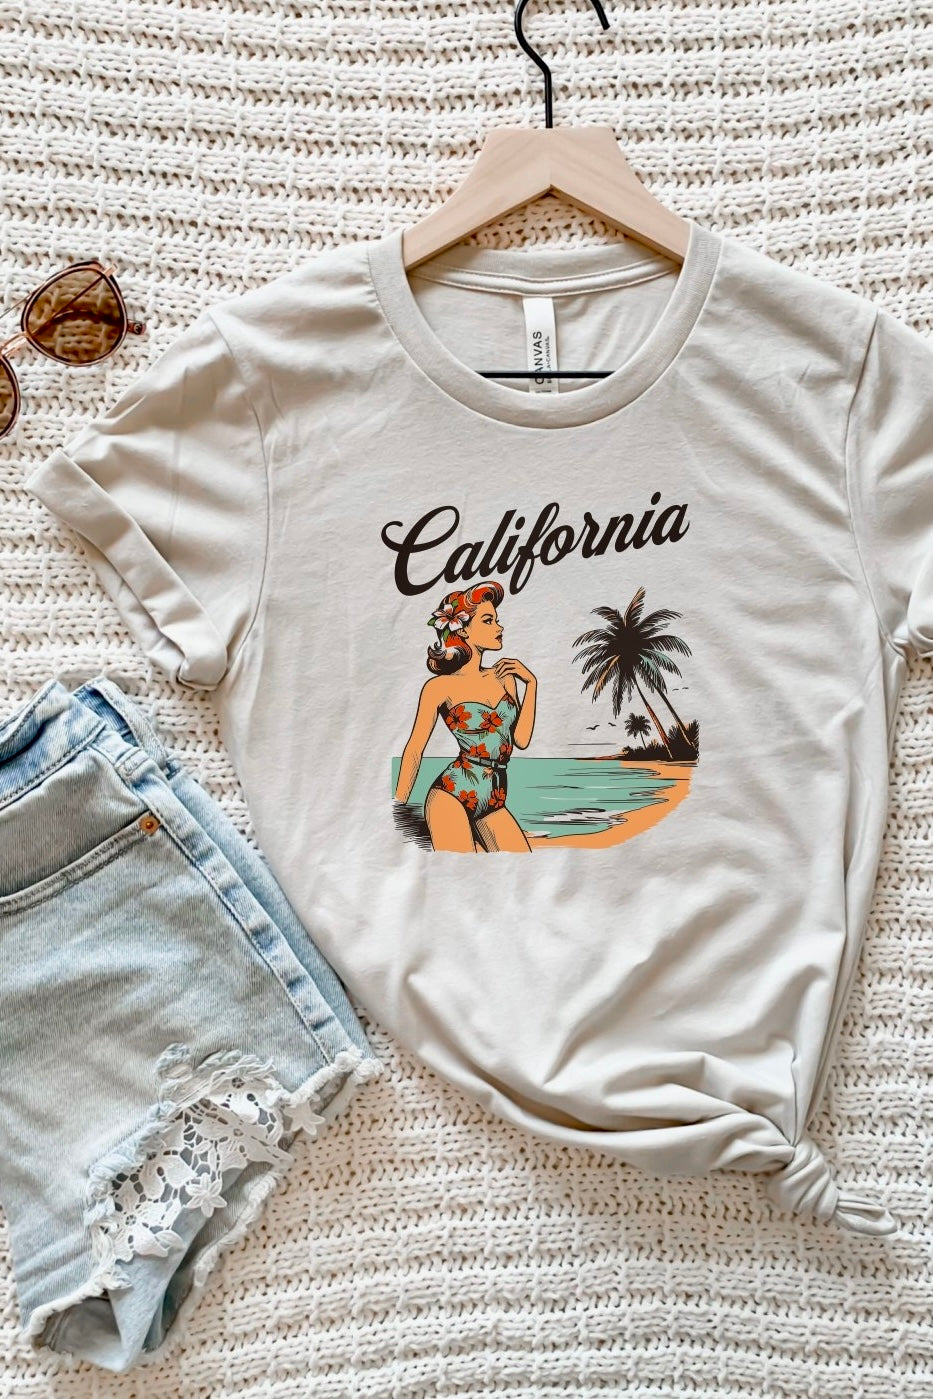 Retro California Beach Short Sleeve Graphic Tee